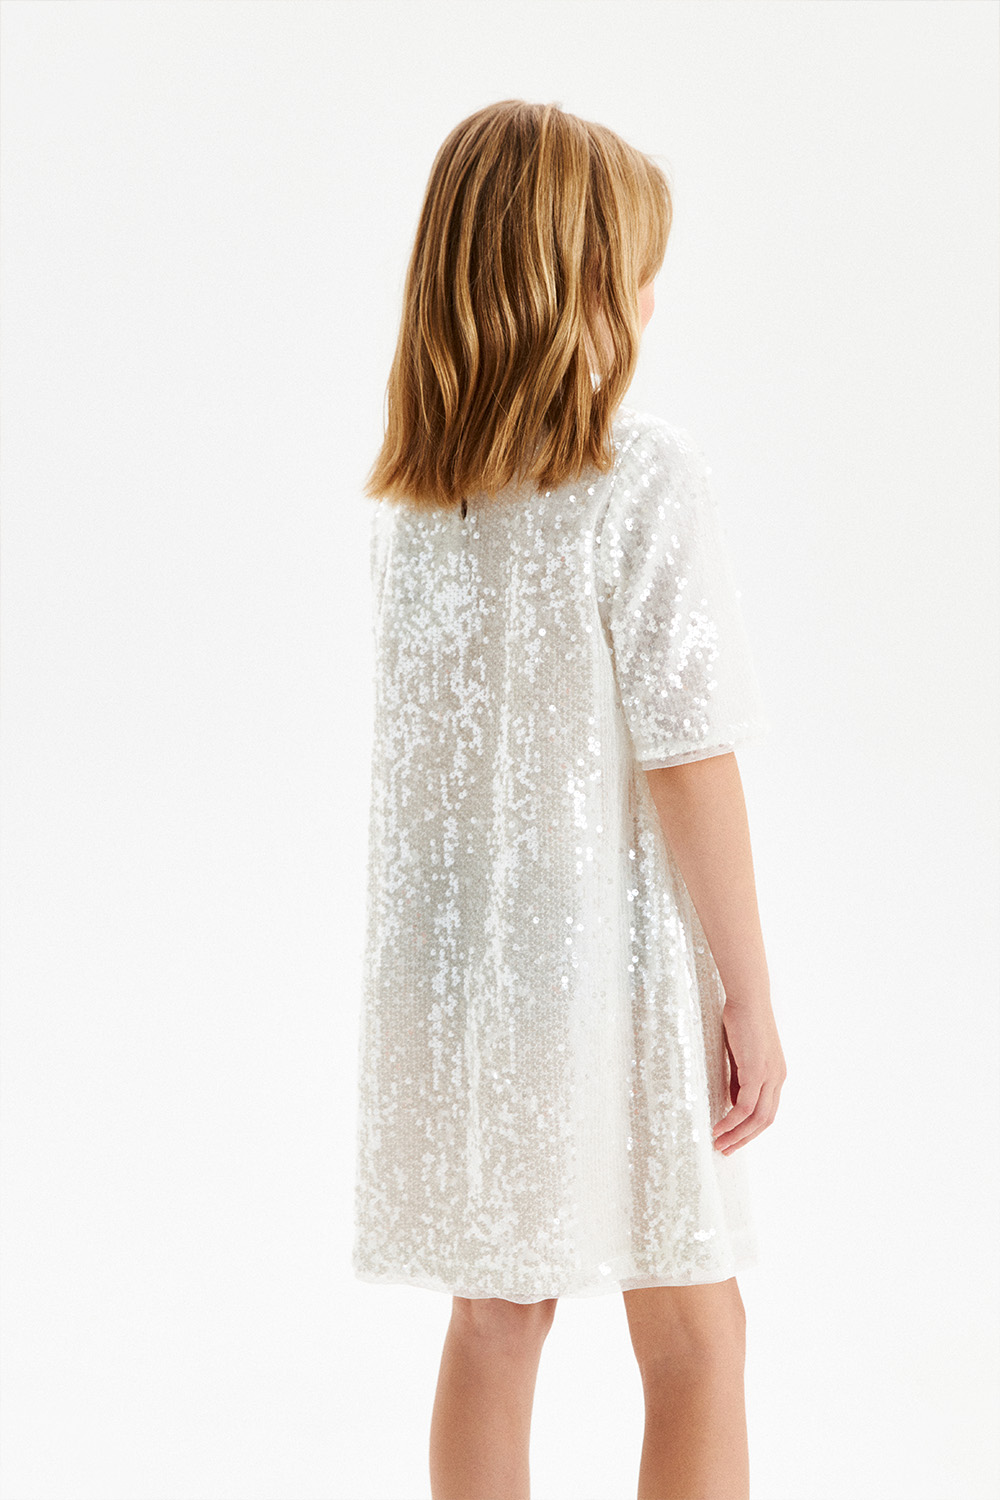 Блестящее платье с пайетками (SNFWG-329-23604-242) Silver Spoon